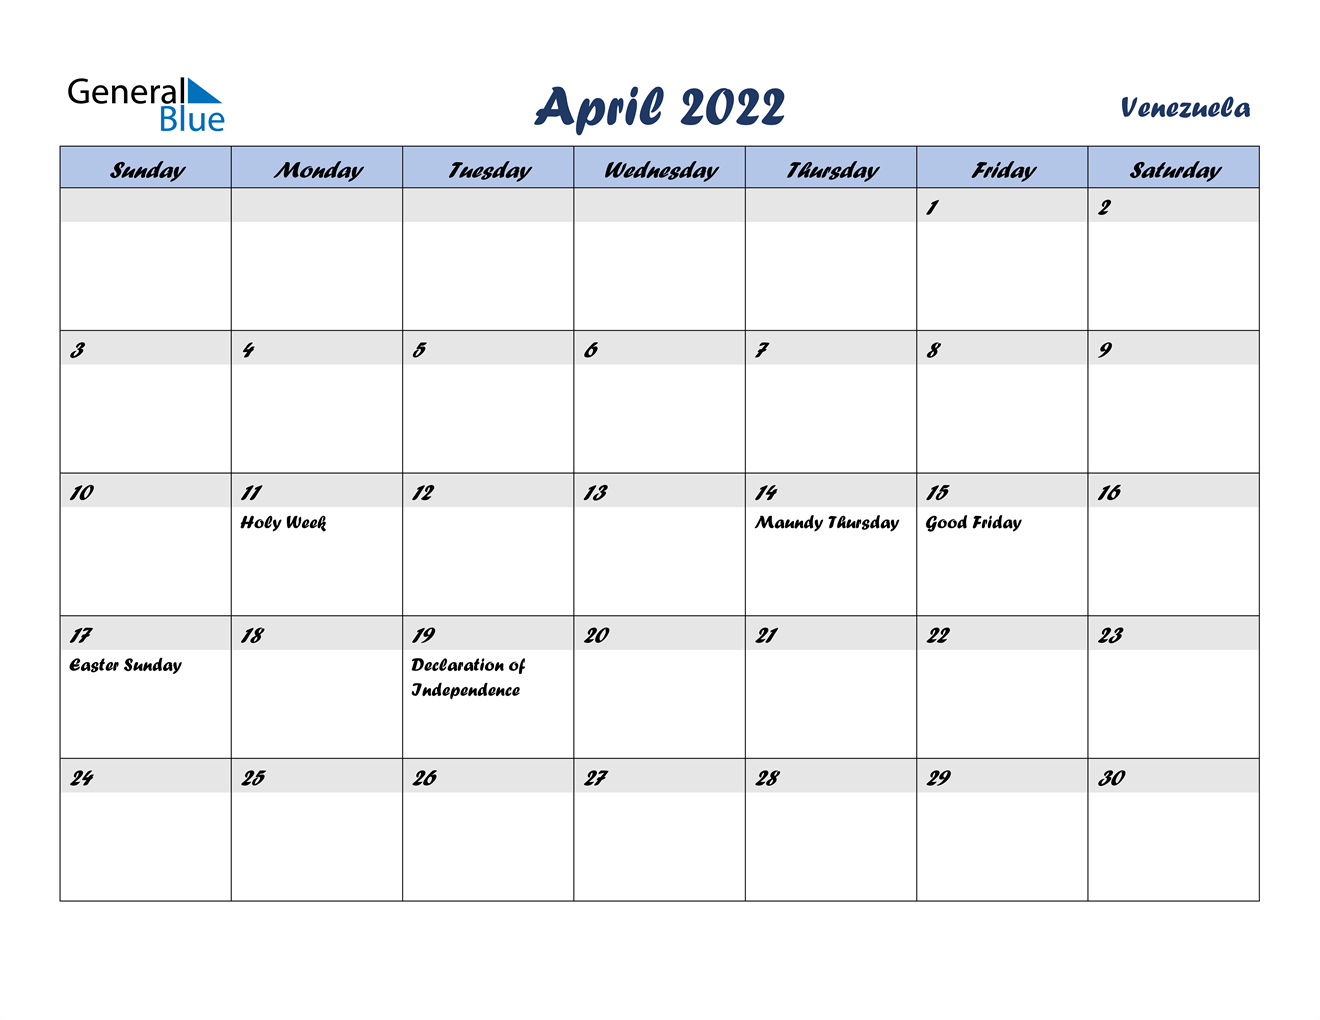 April 2022 Calendar - Venezuela